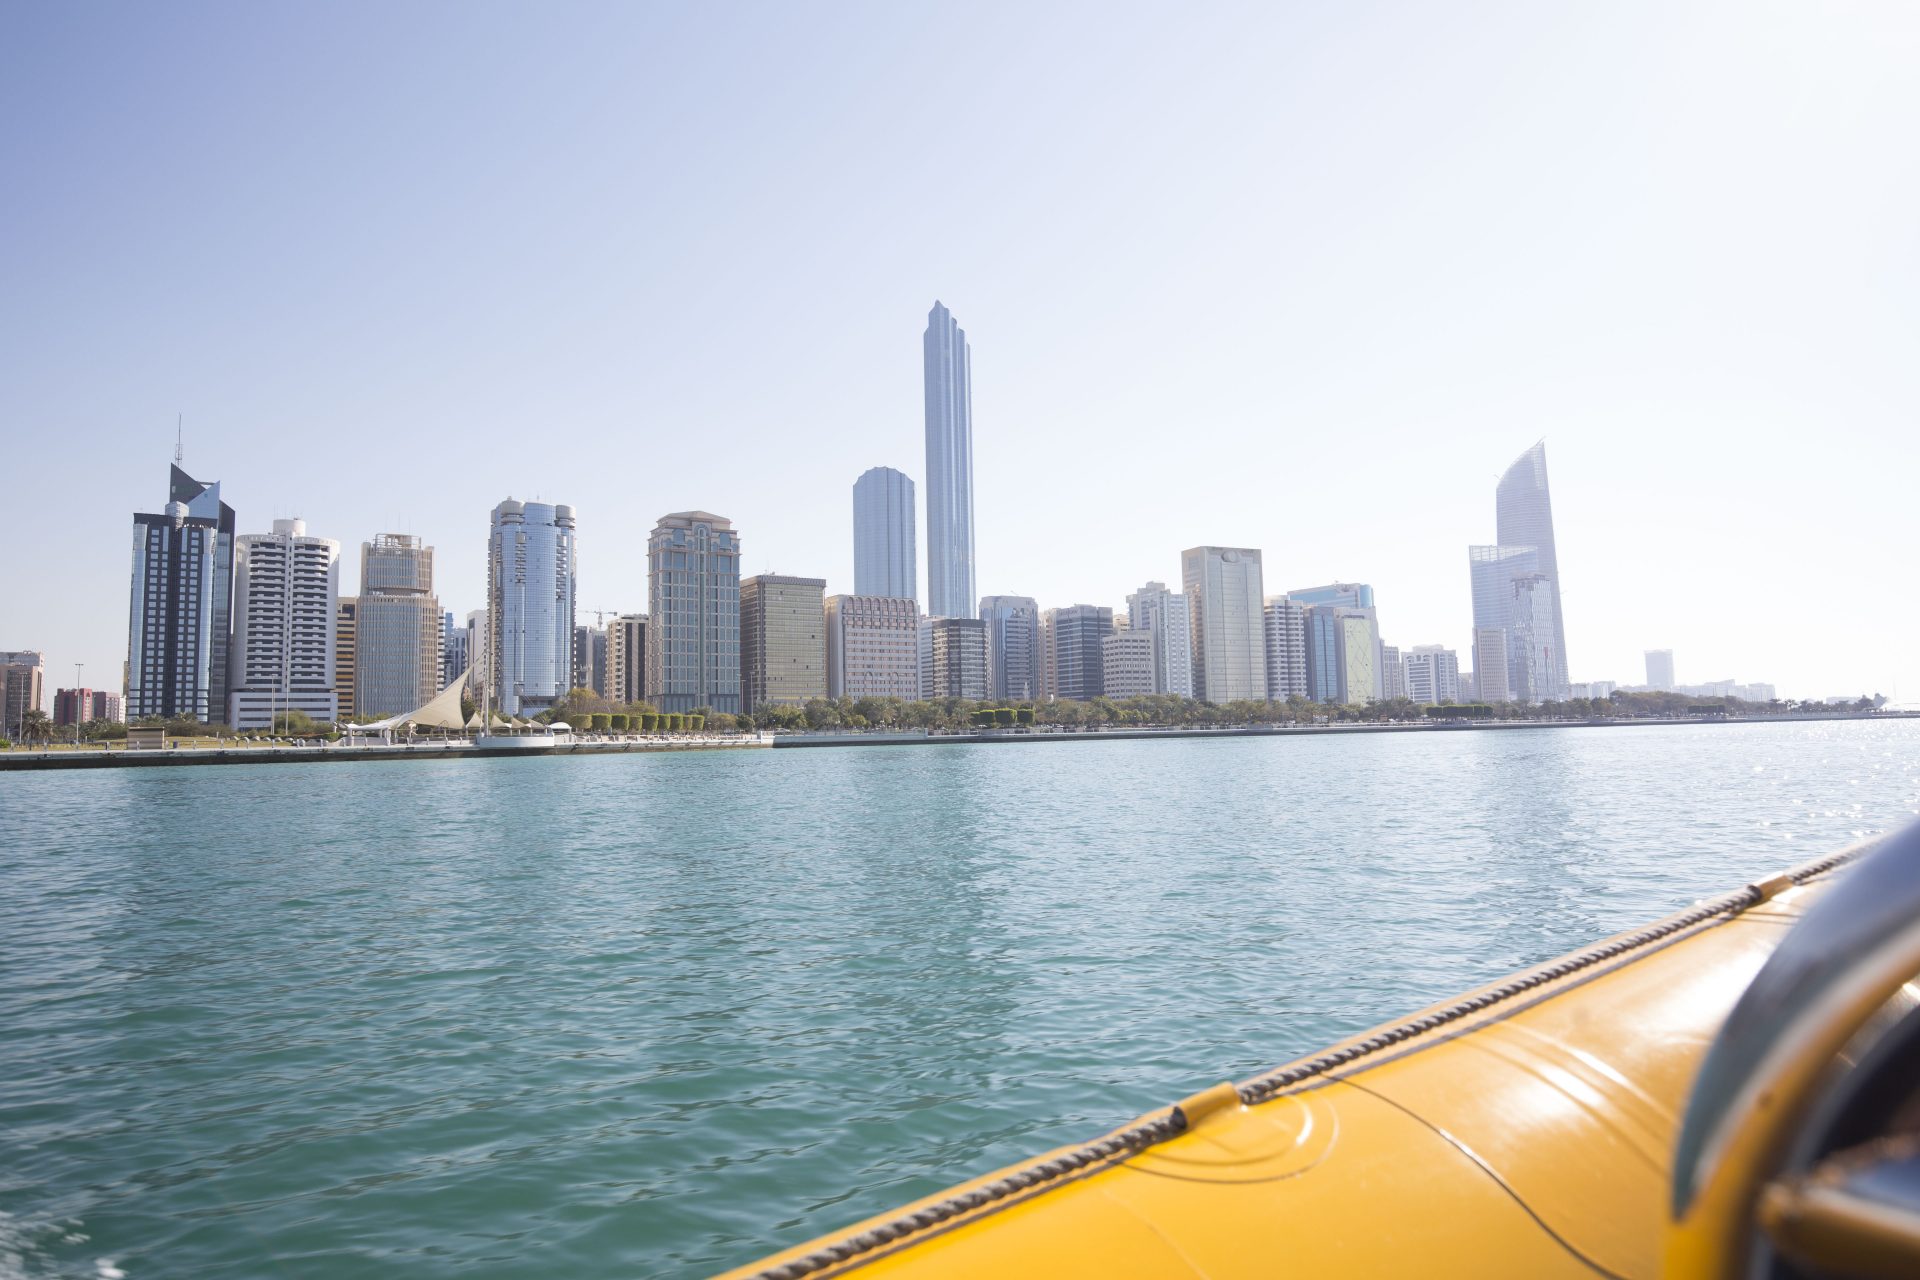 60-Minute Abu Dhabi Corniche Boat Tour 